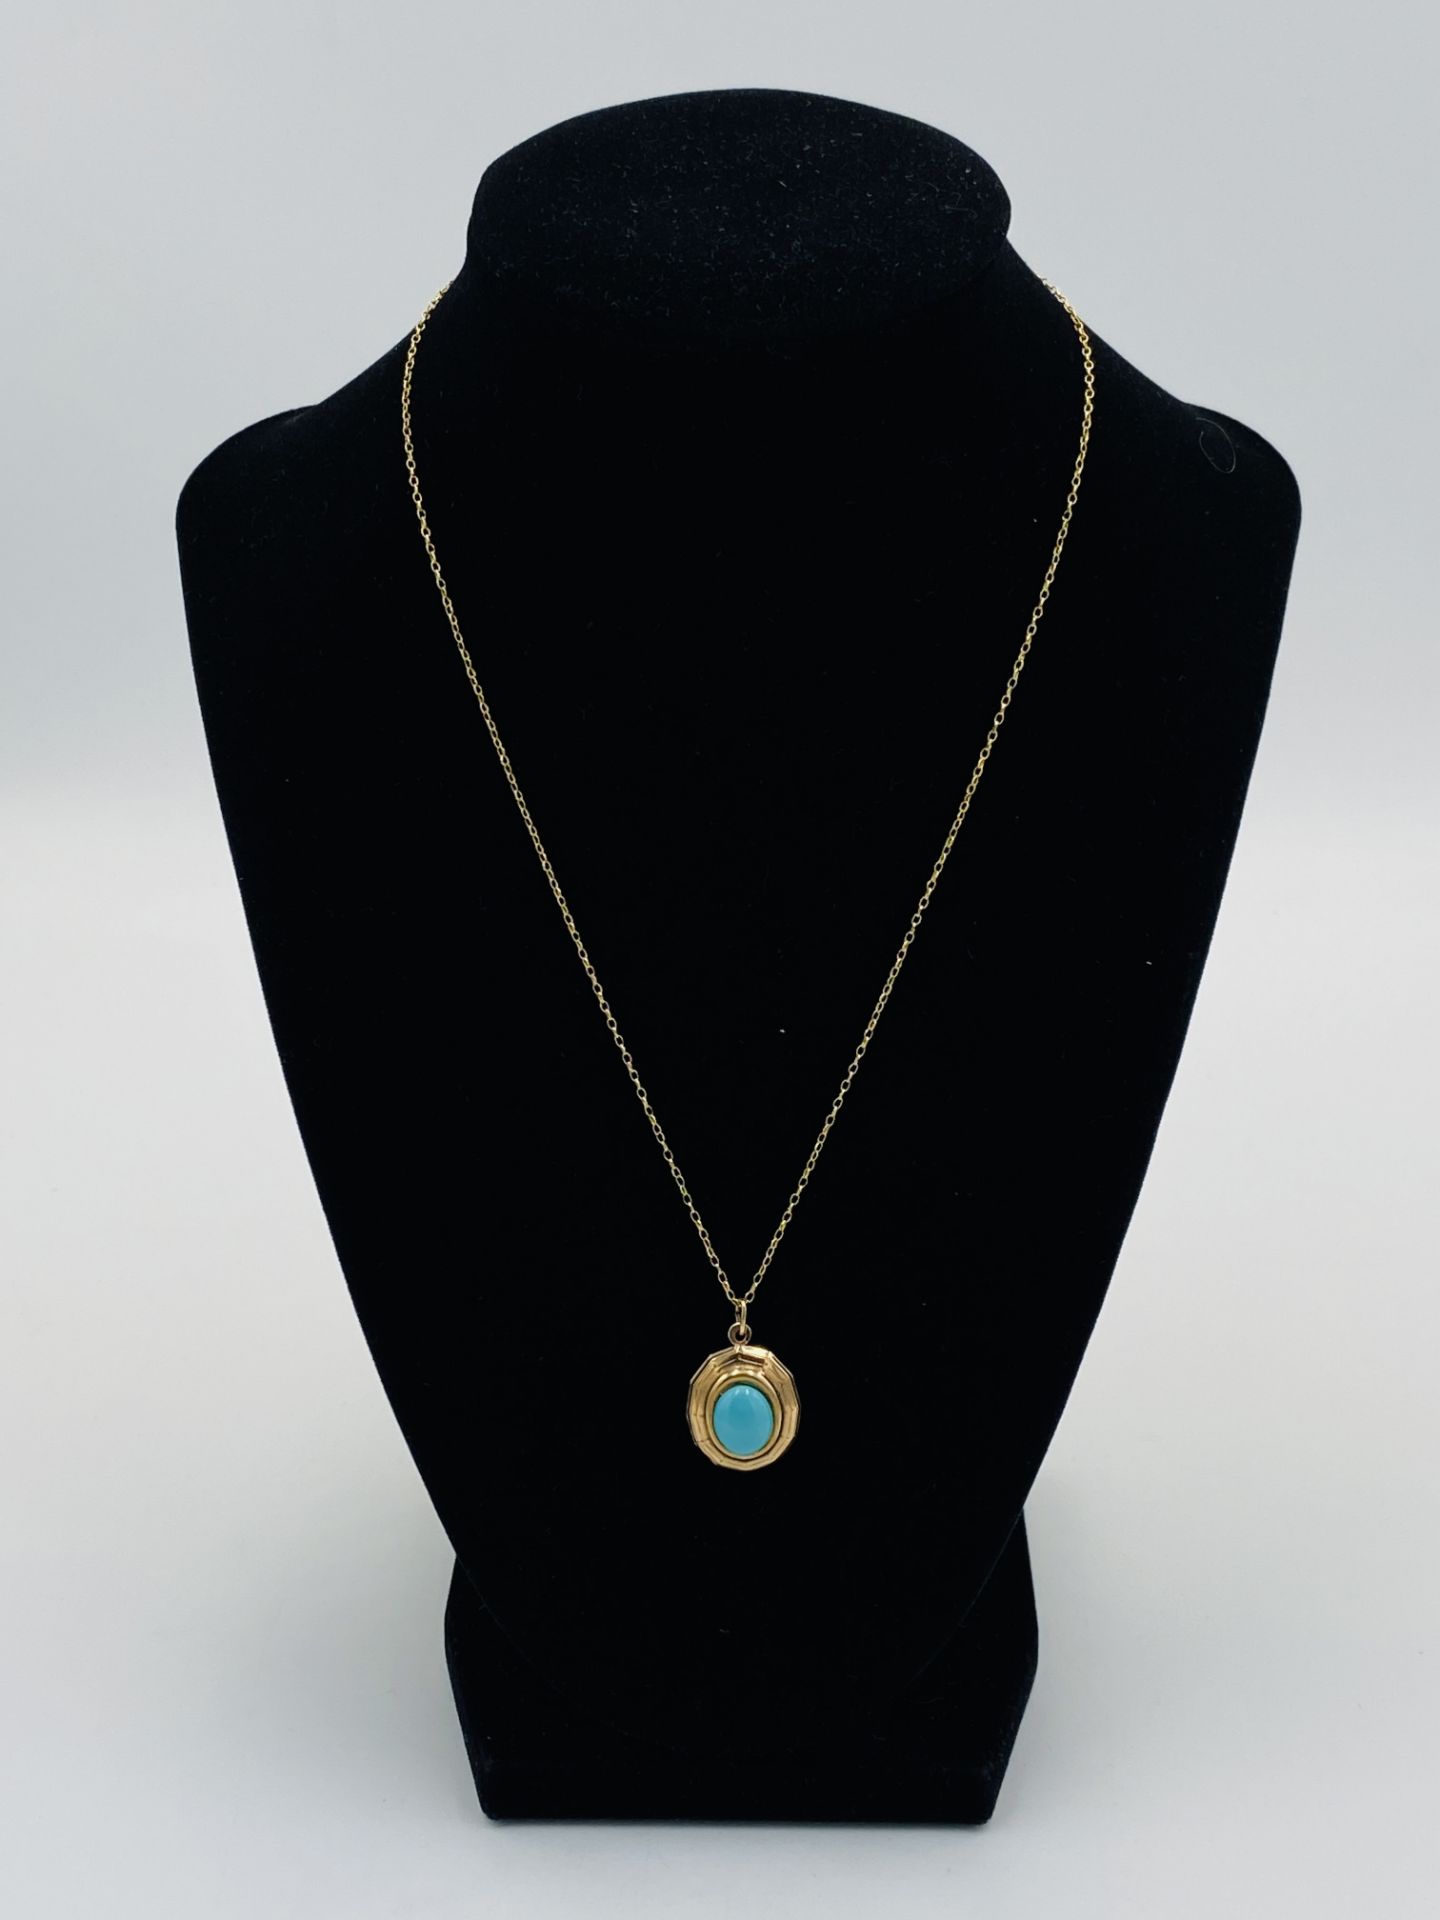 9ct gold necklace with turquoise stone pendant - Bild 2 aus 4